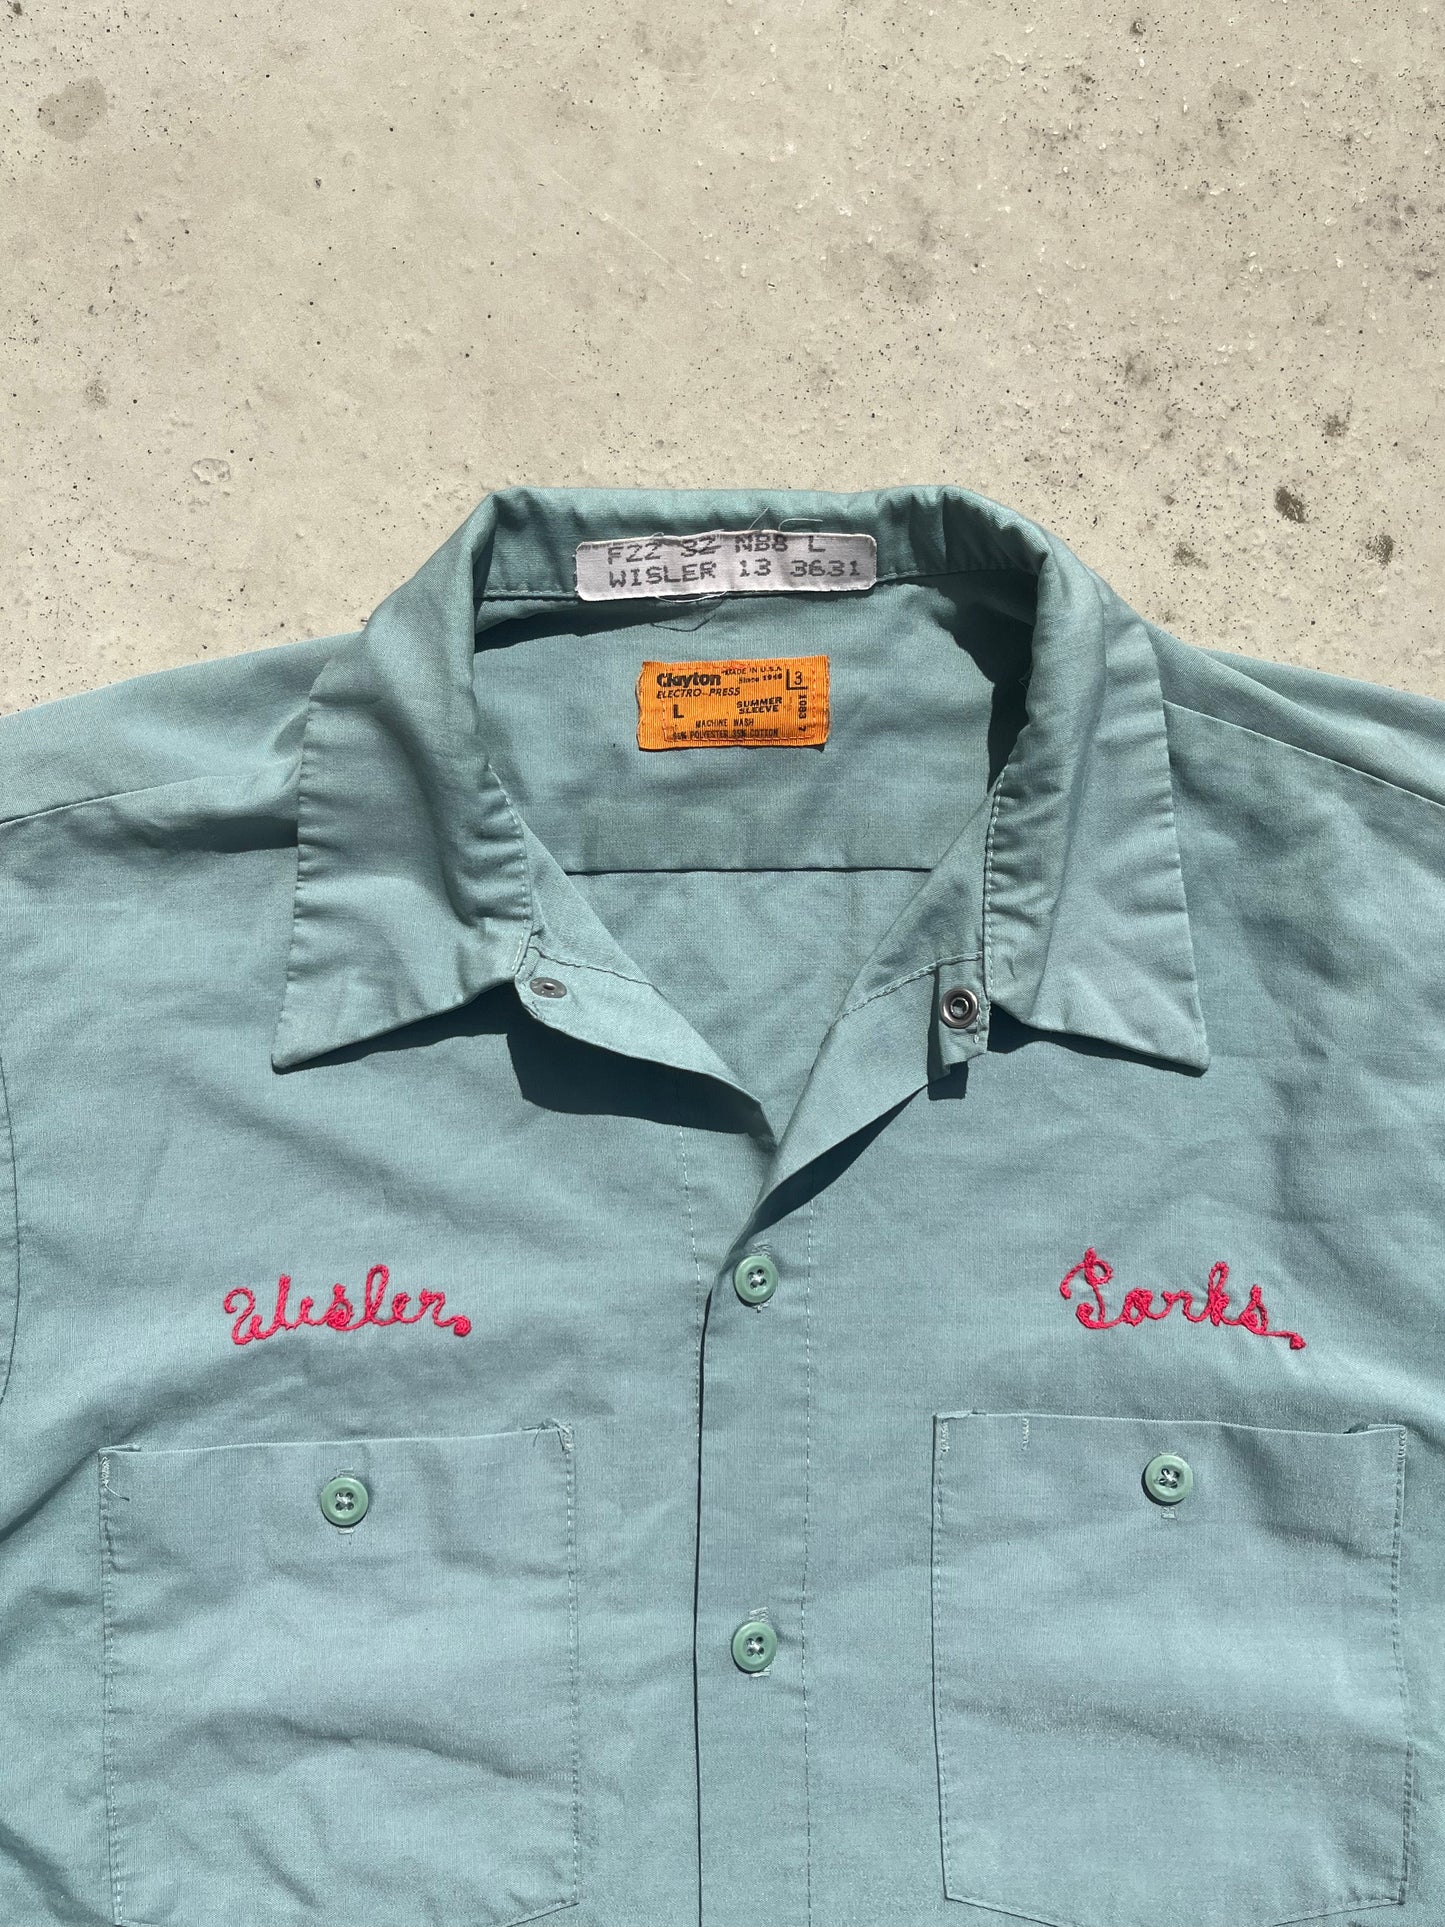 Vintage 80’s Patrol Shirt